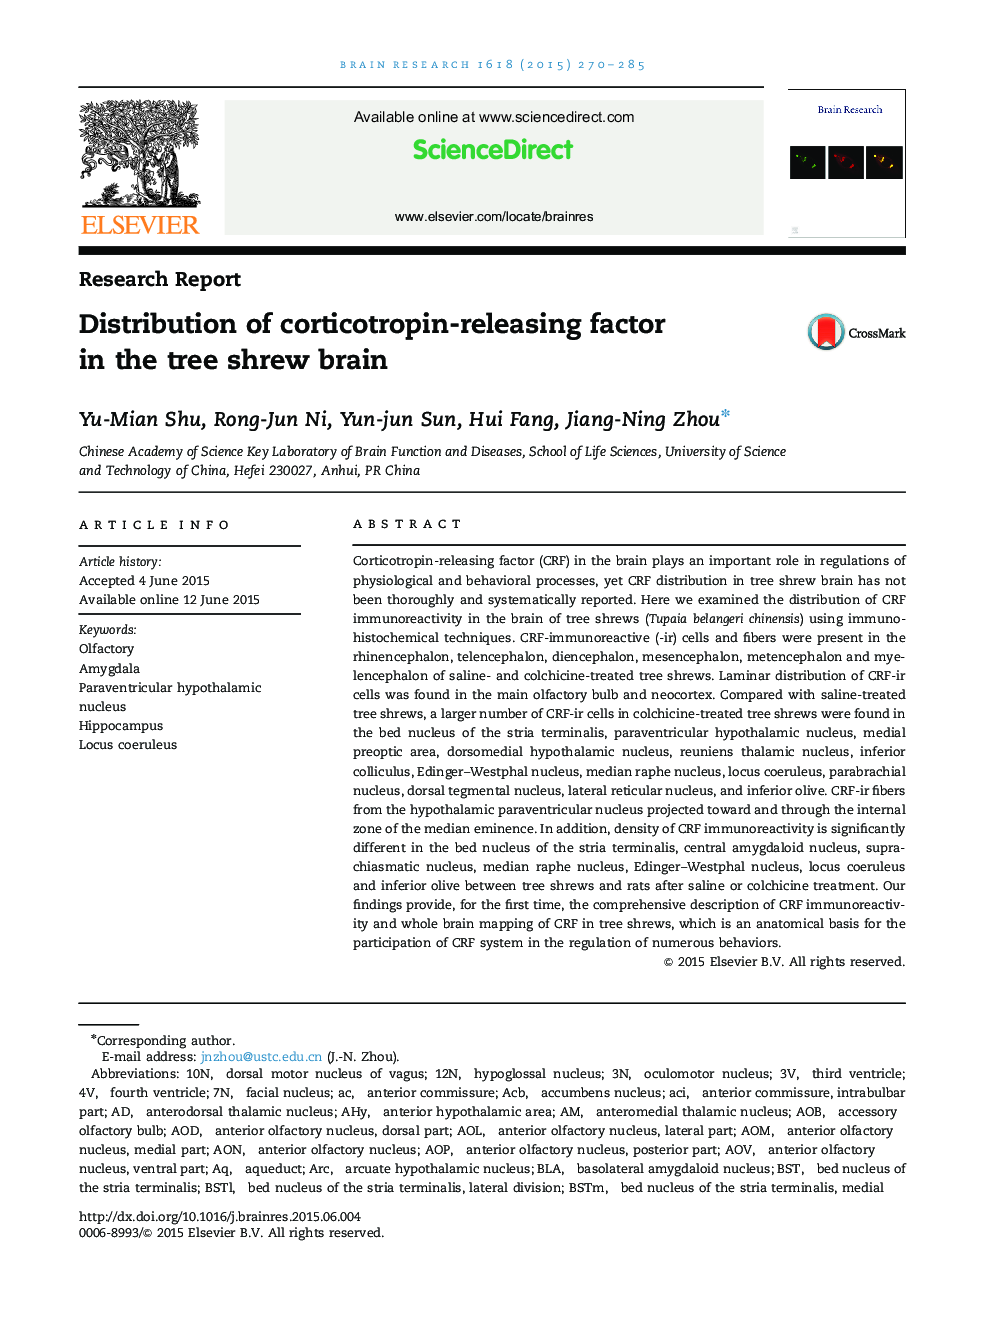 Research ReportDistribution of corticotropin-releasing factor in the tree shrew brain